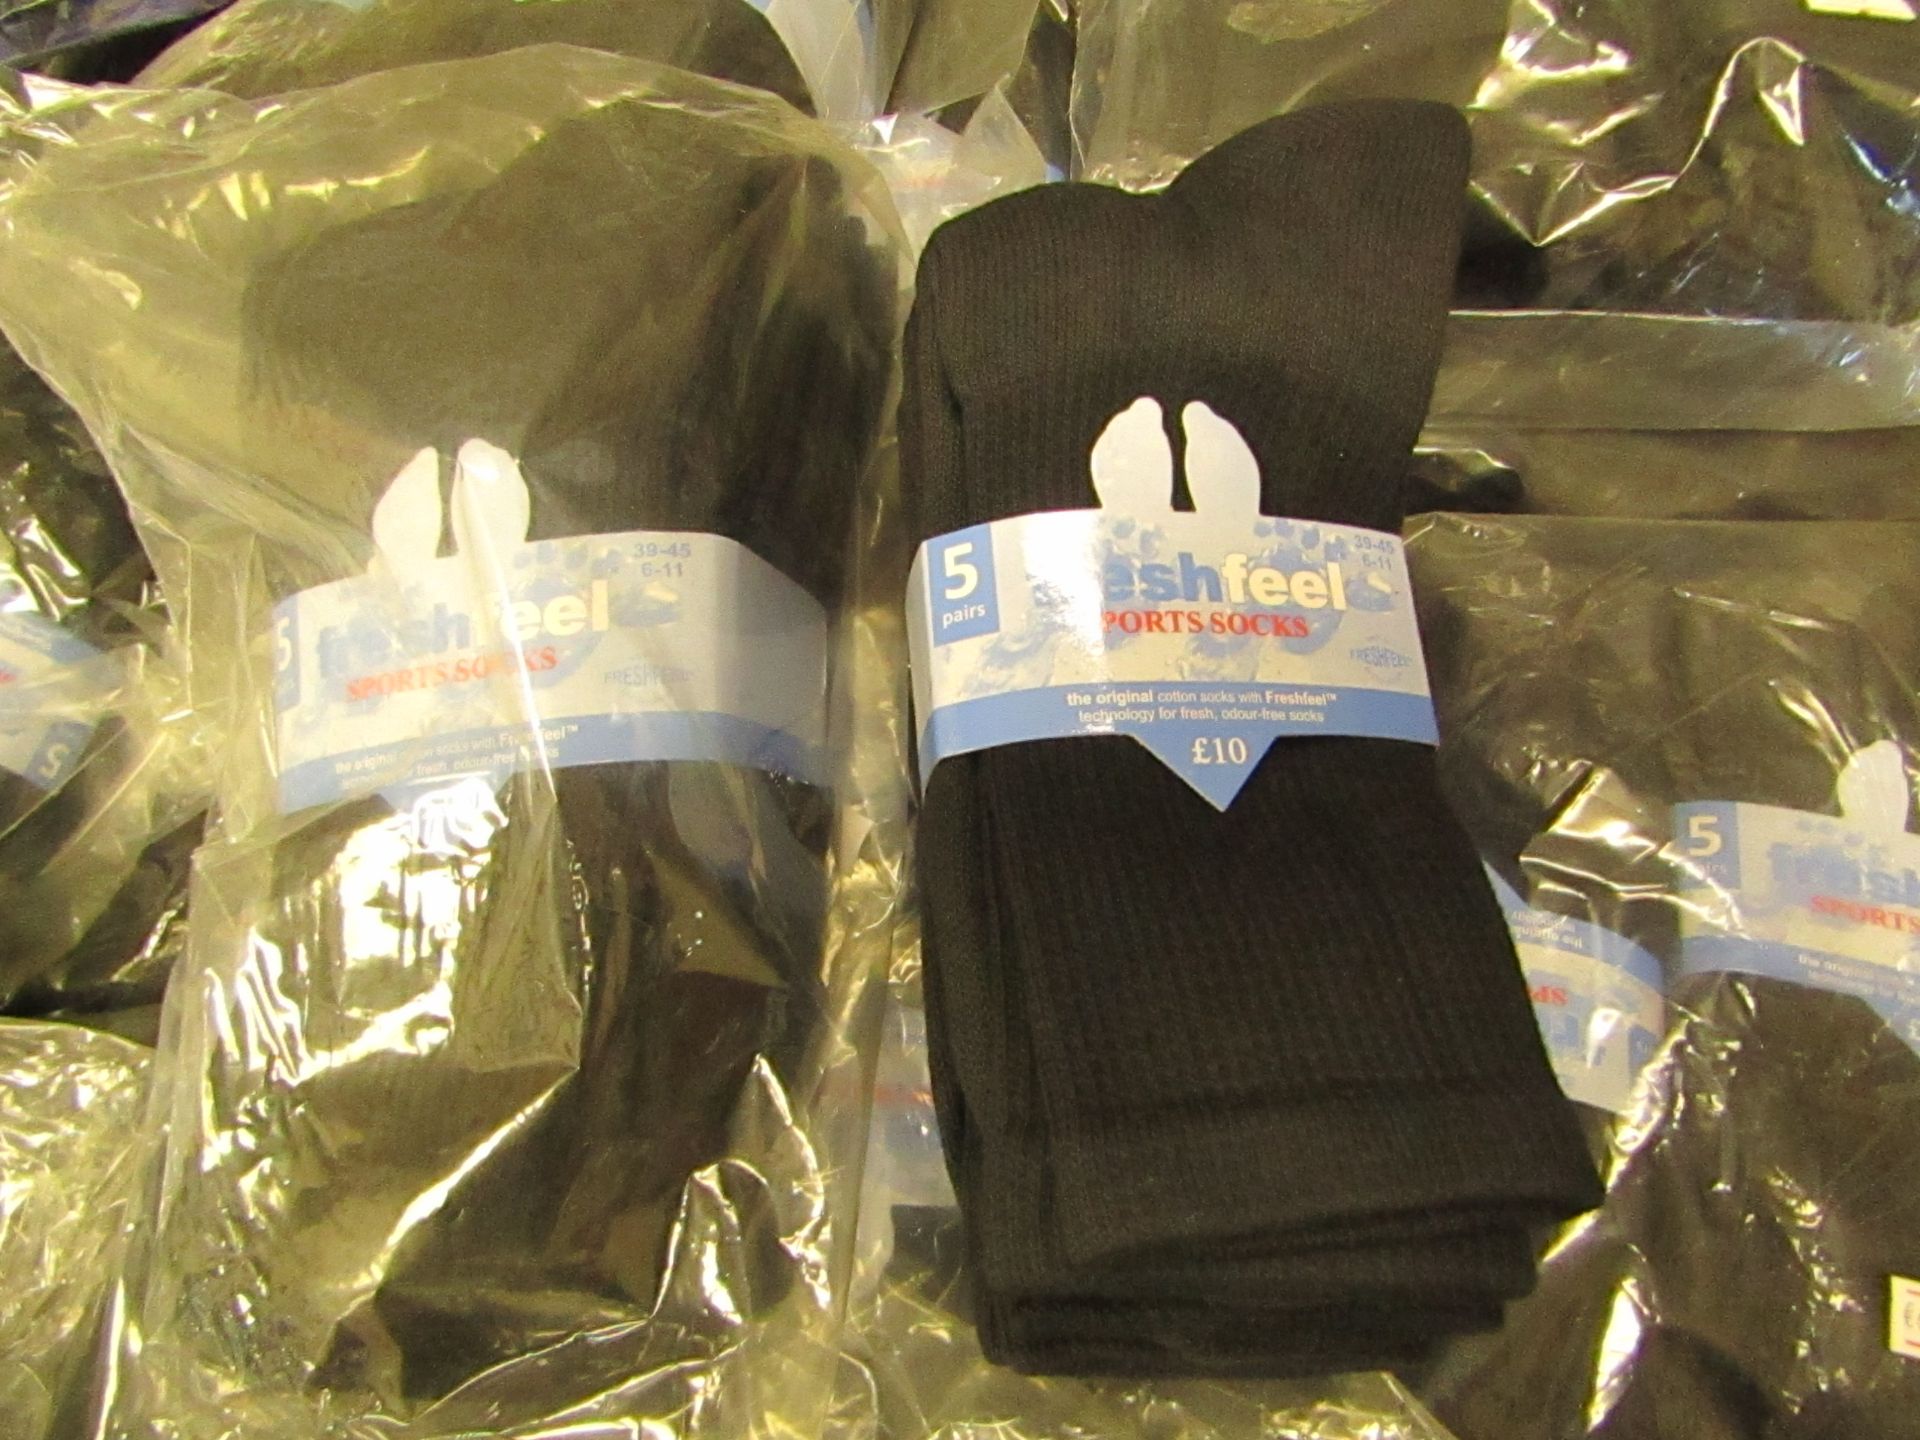 12 X Pairs of Fresh Feel Mens Sport Socks Size 6-11 New in Packaging